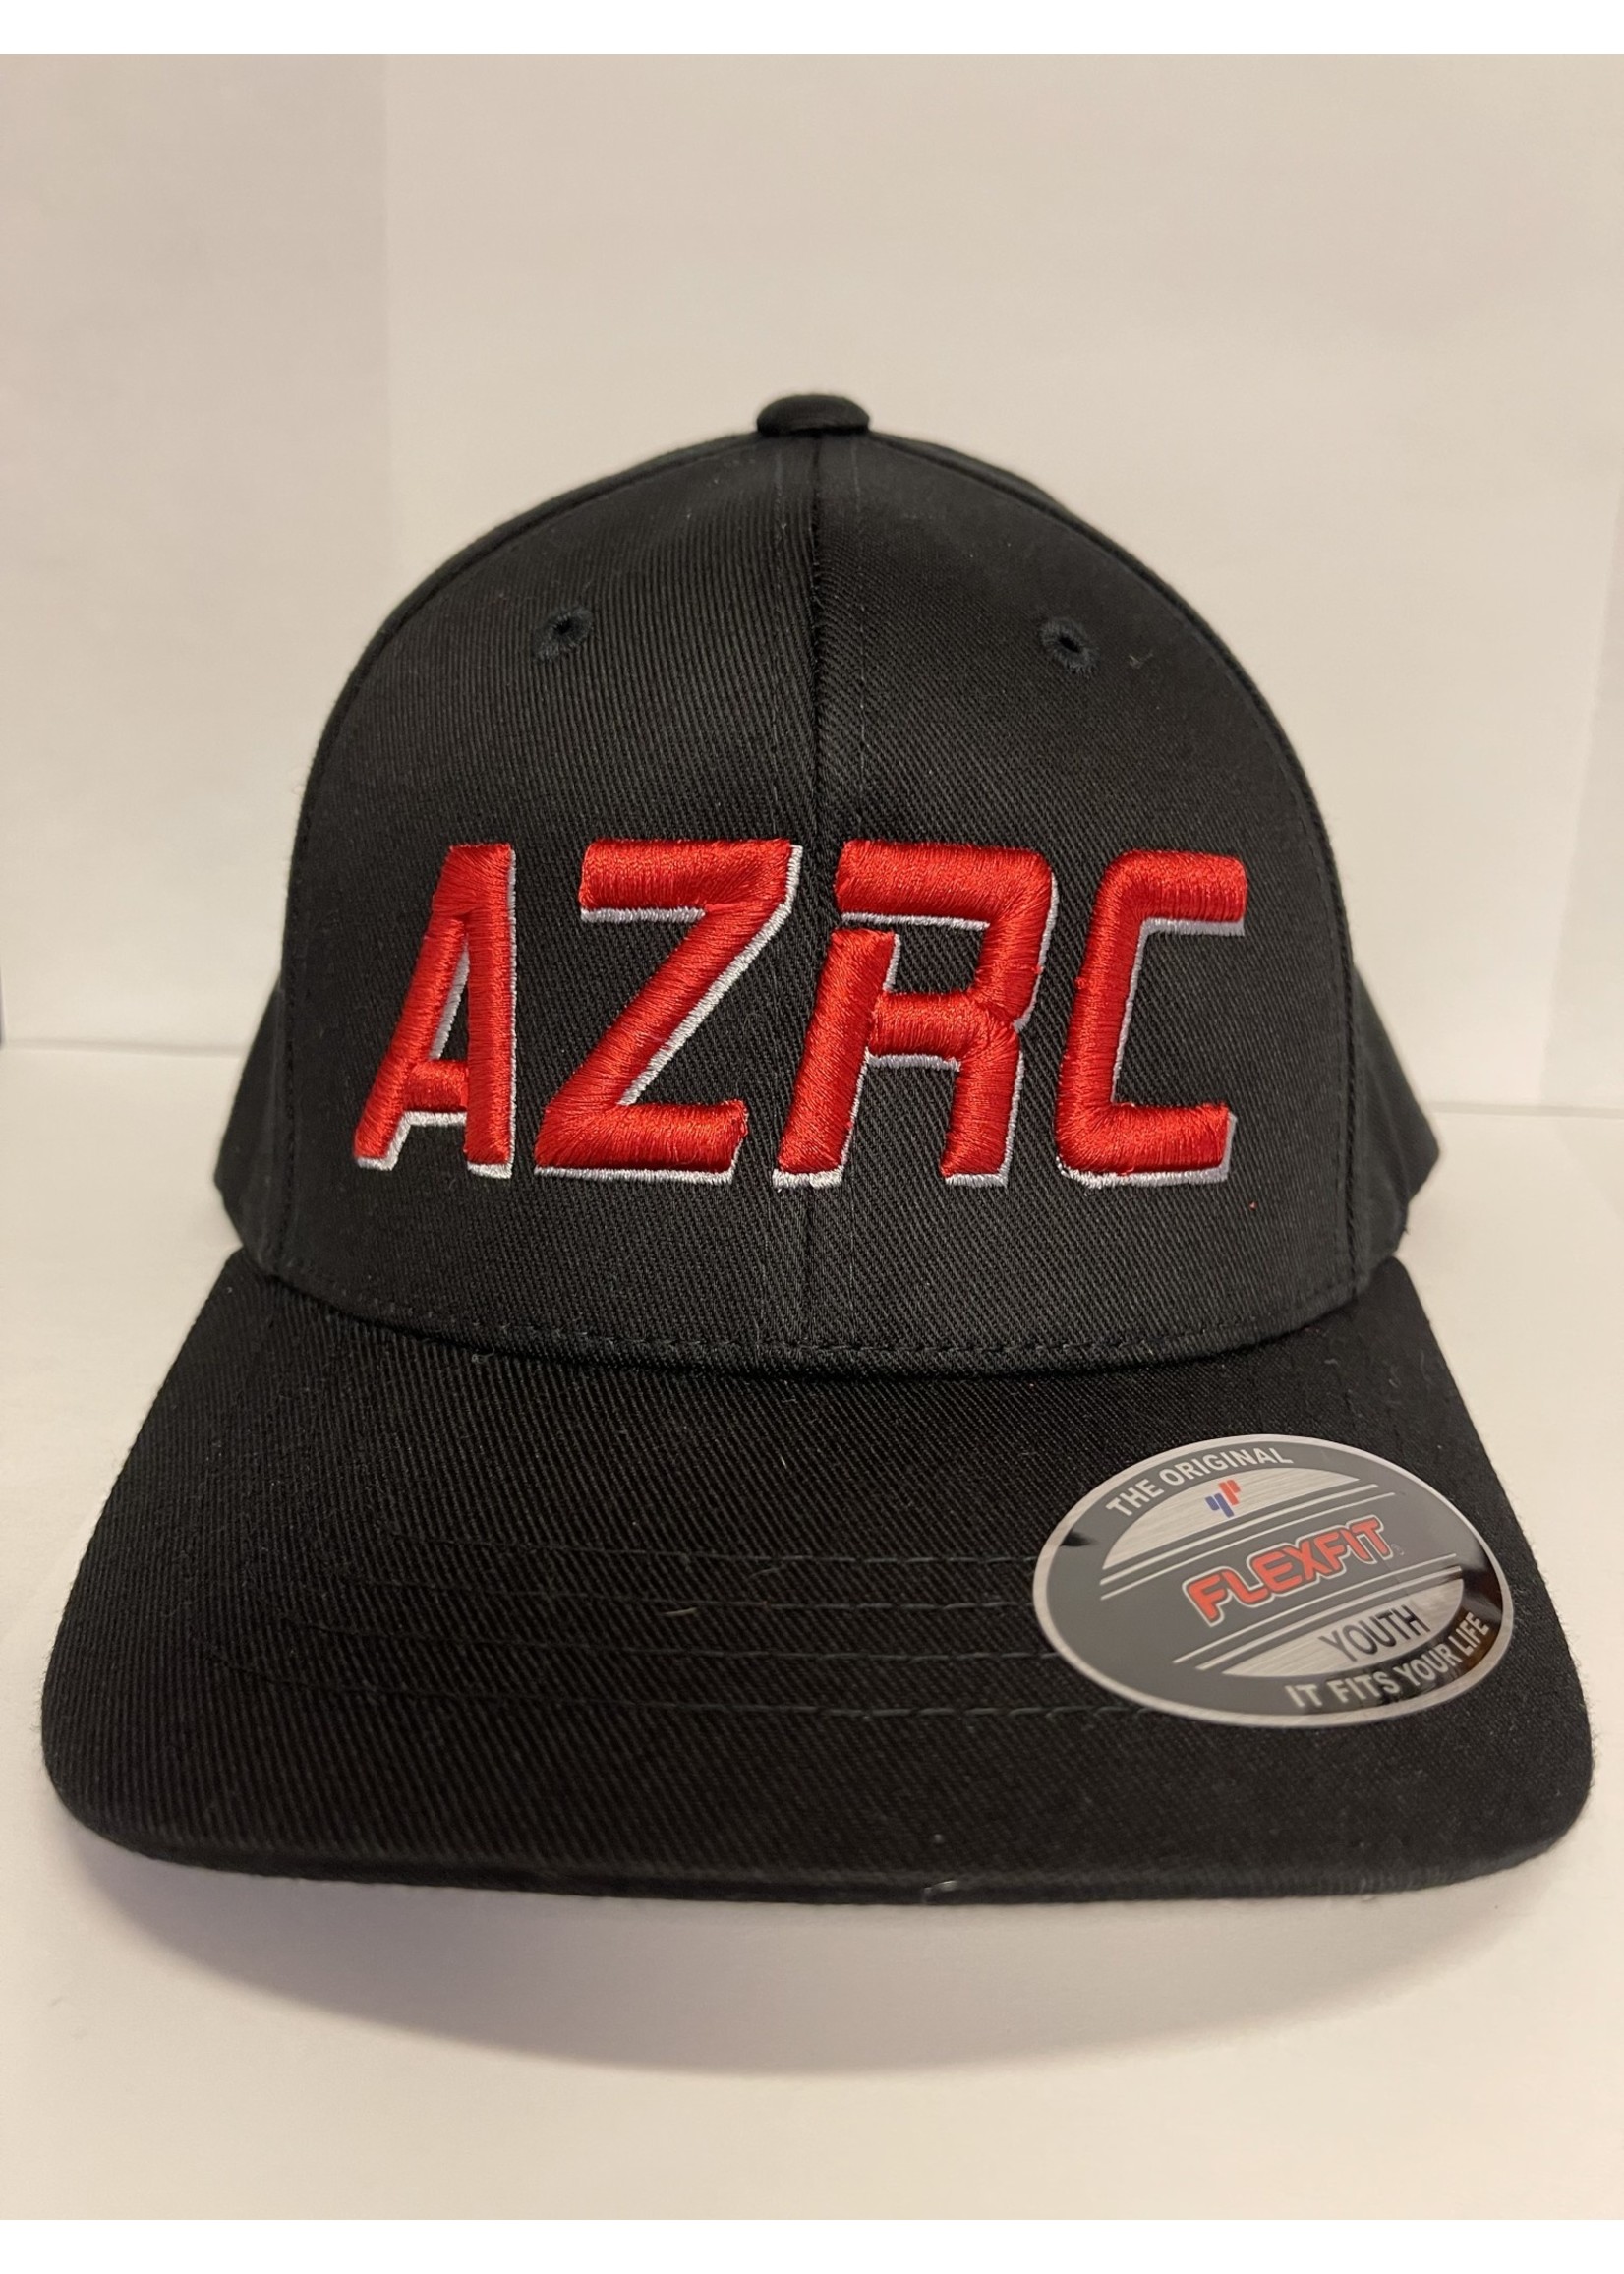 AZRC AZRC Flexfit Hat Black/Red (Youth)